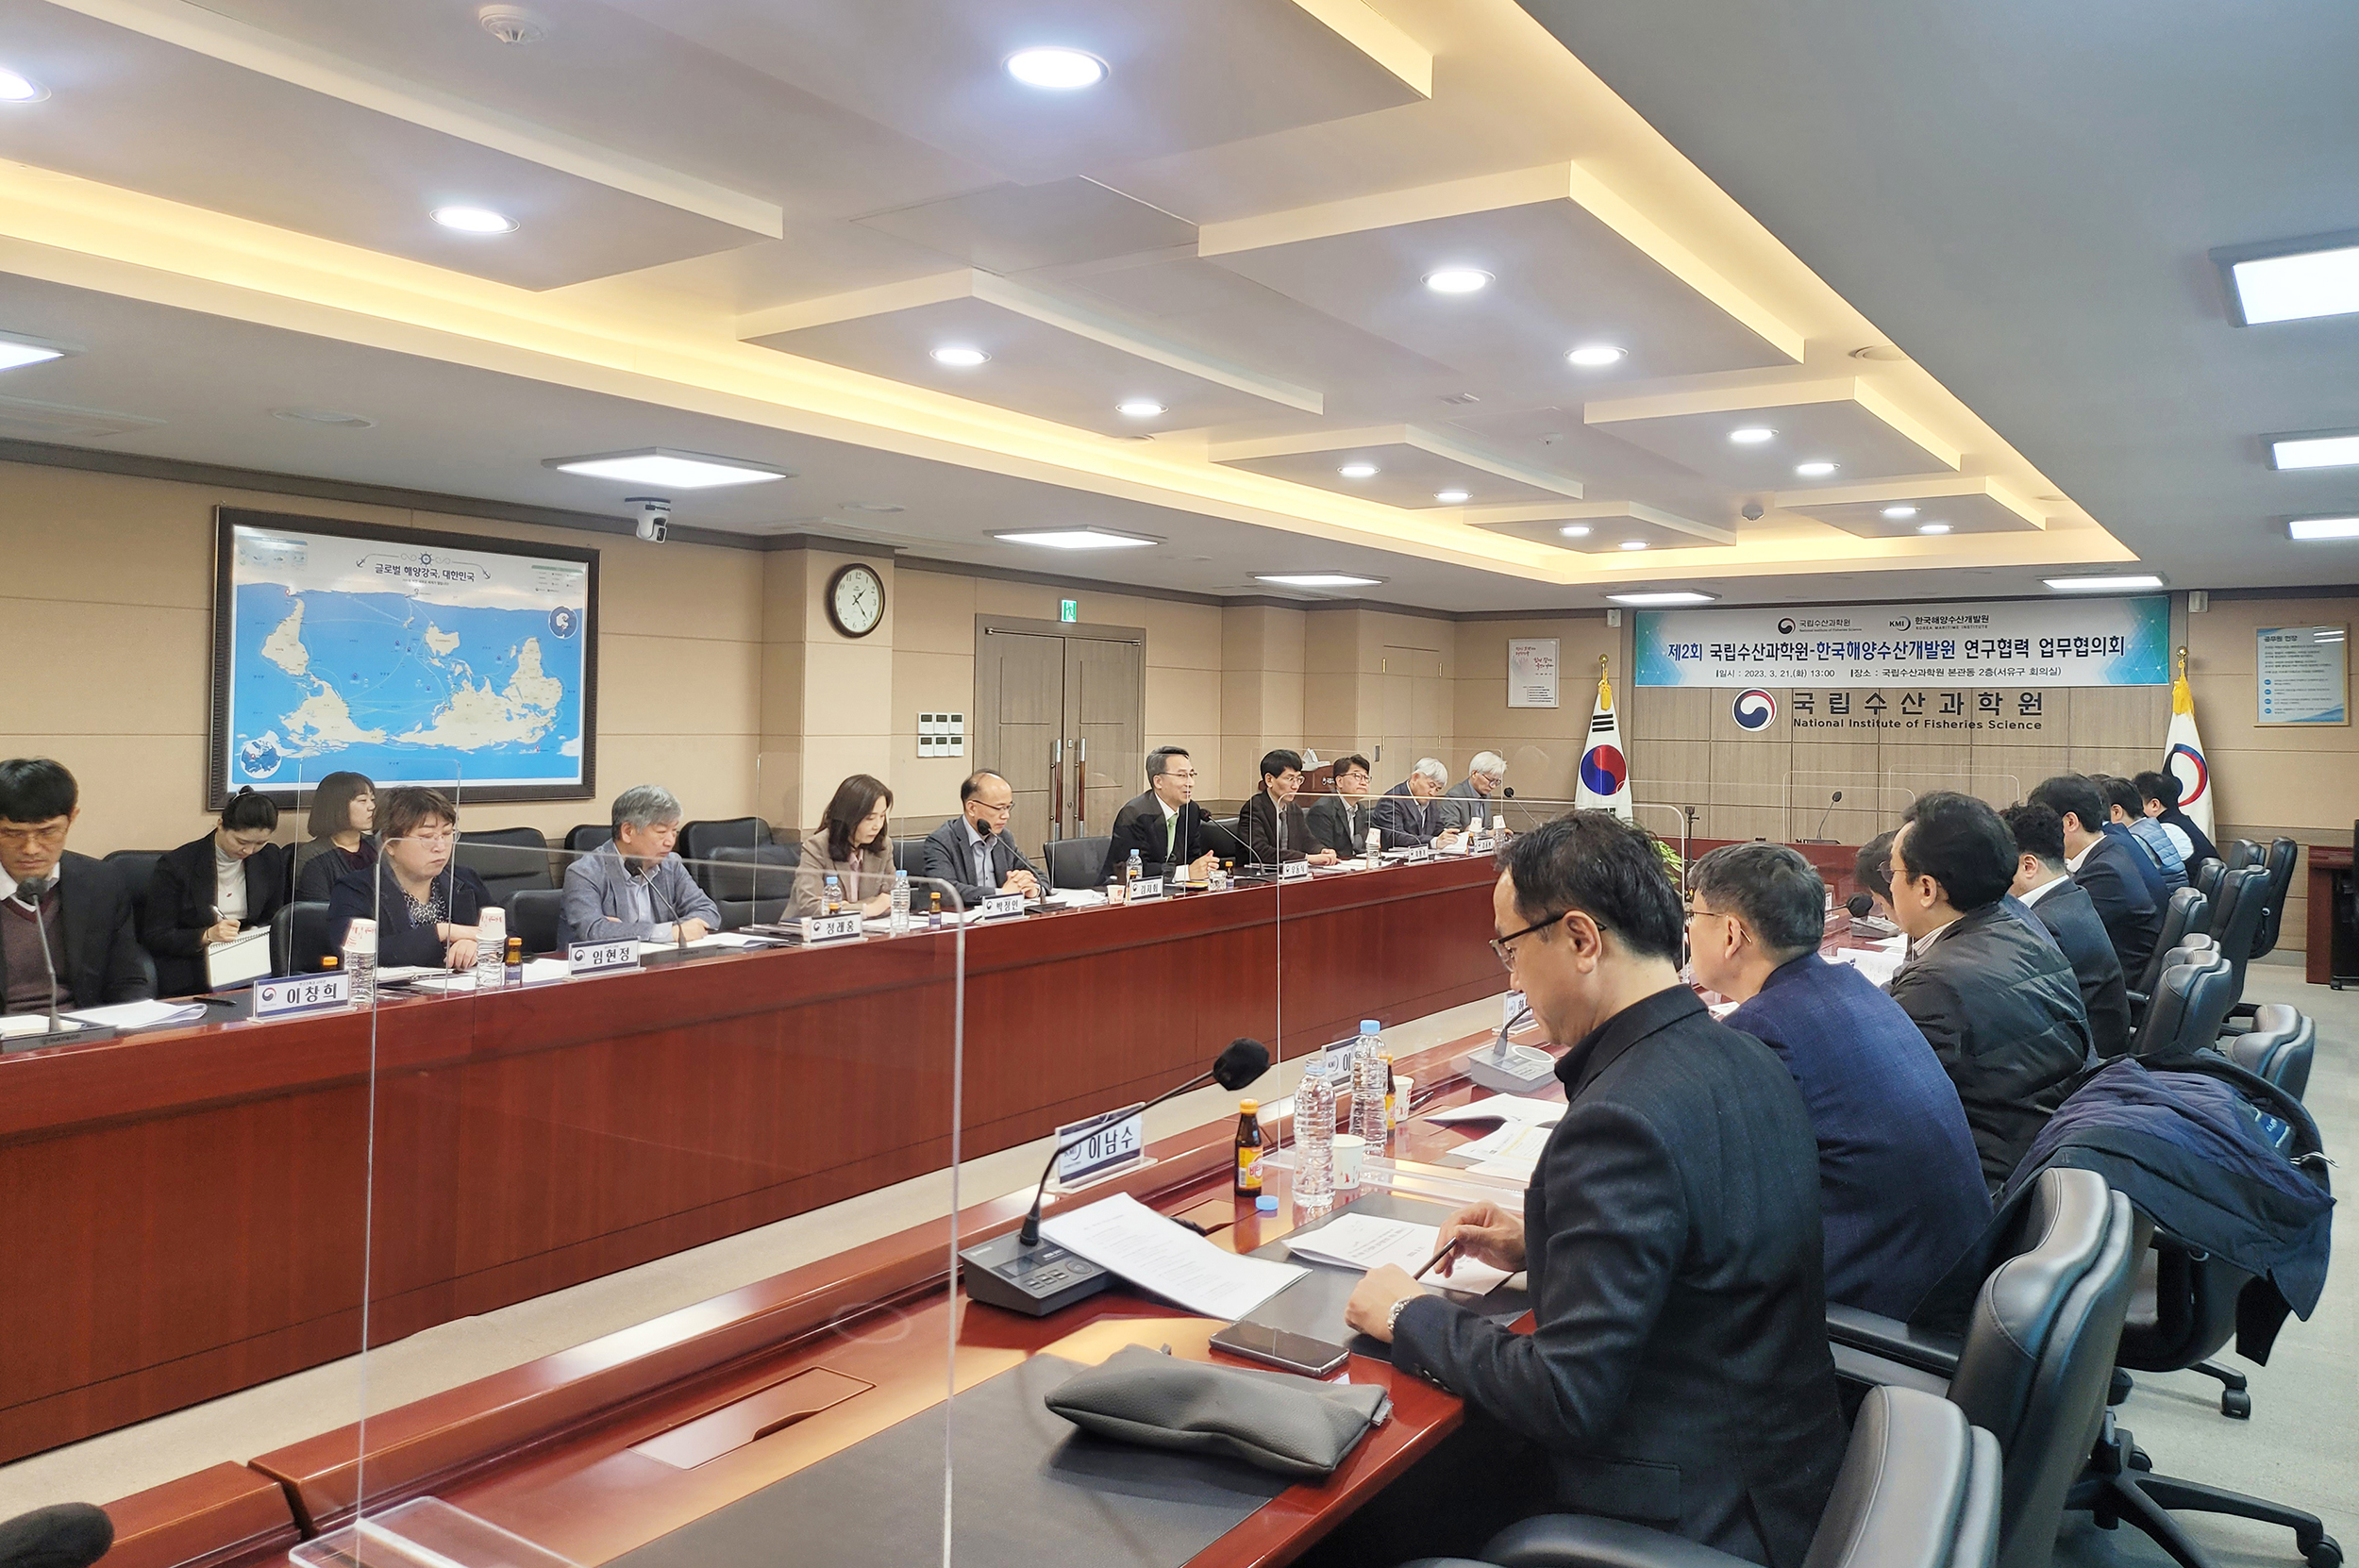 NIFS held a consultation meeting with KMI 배경